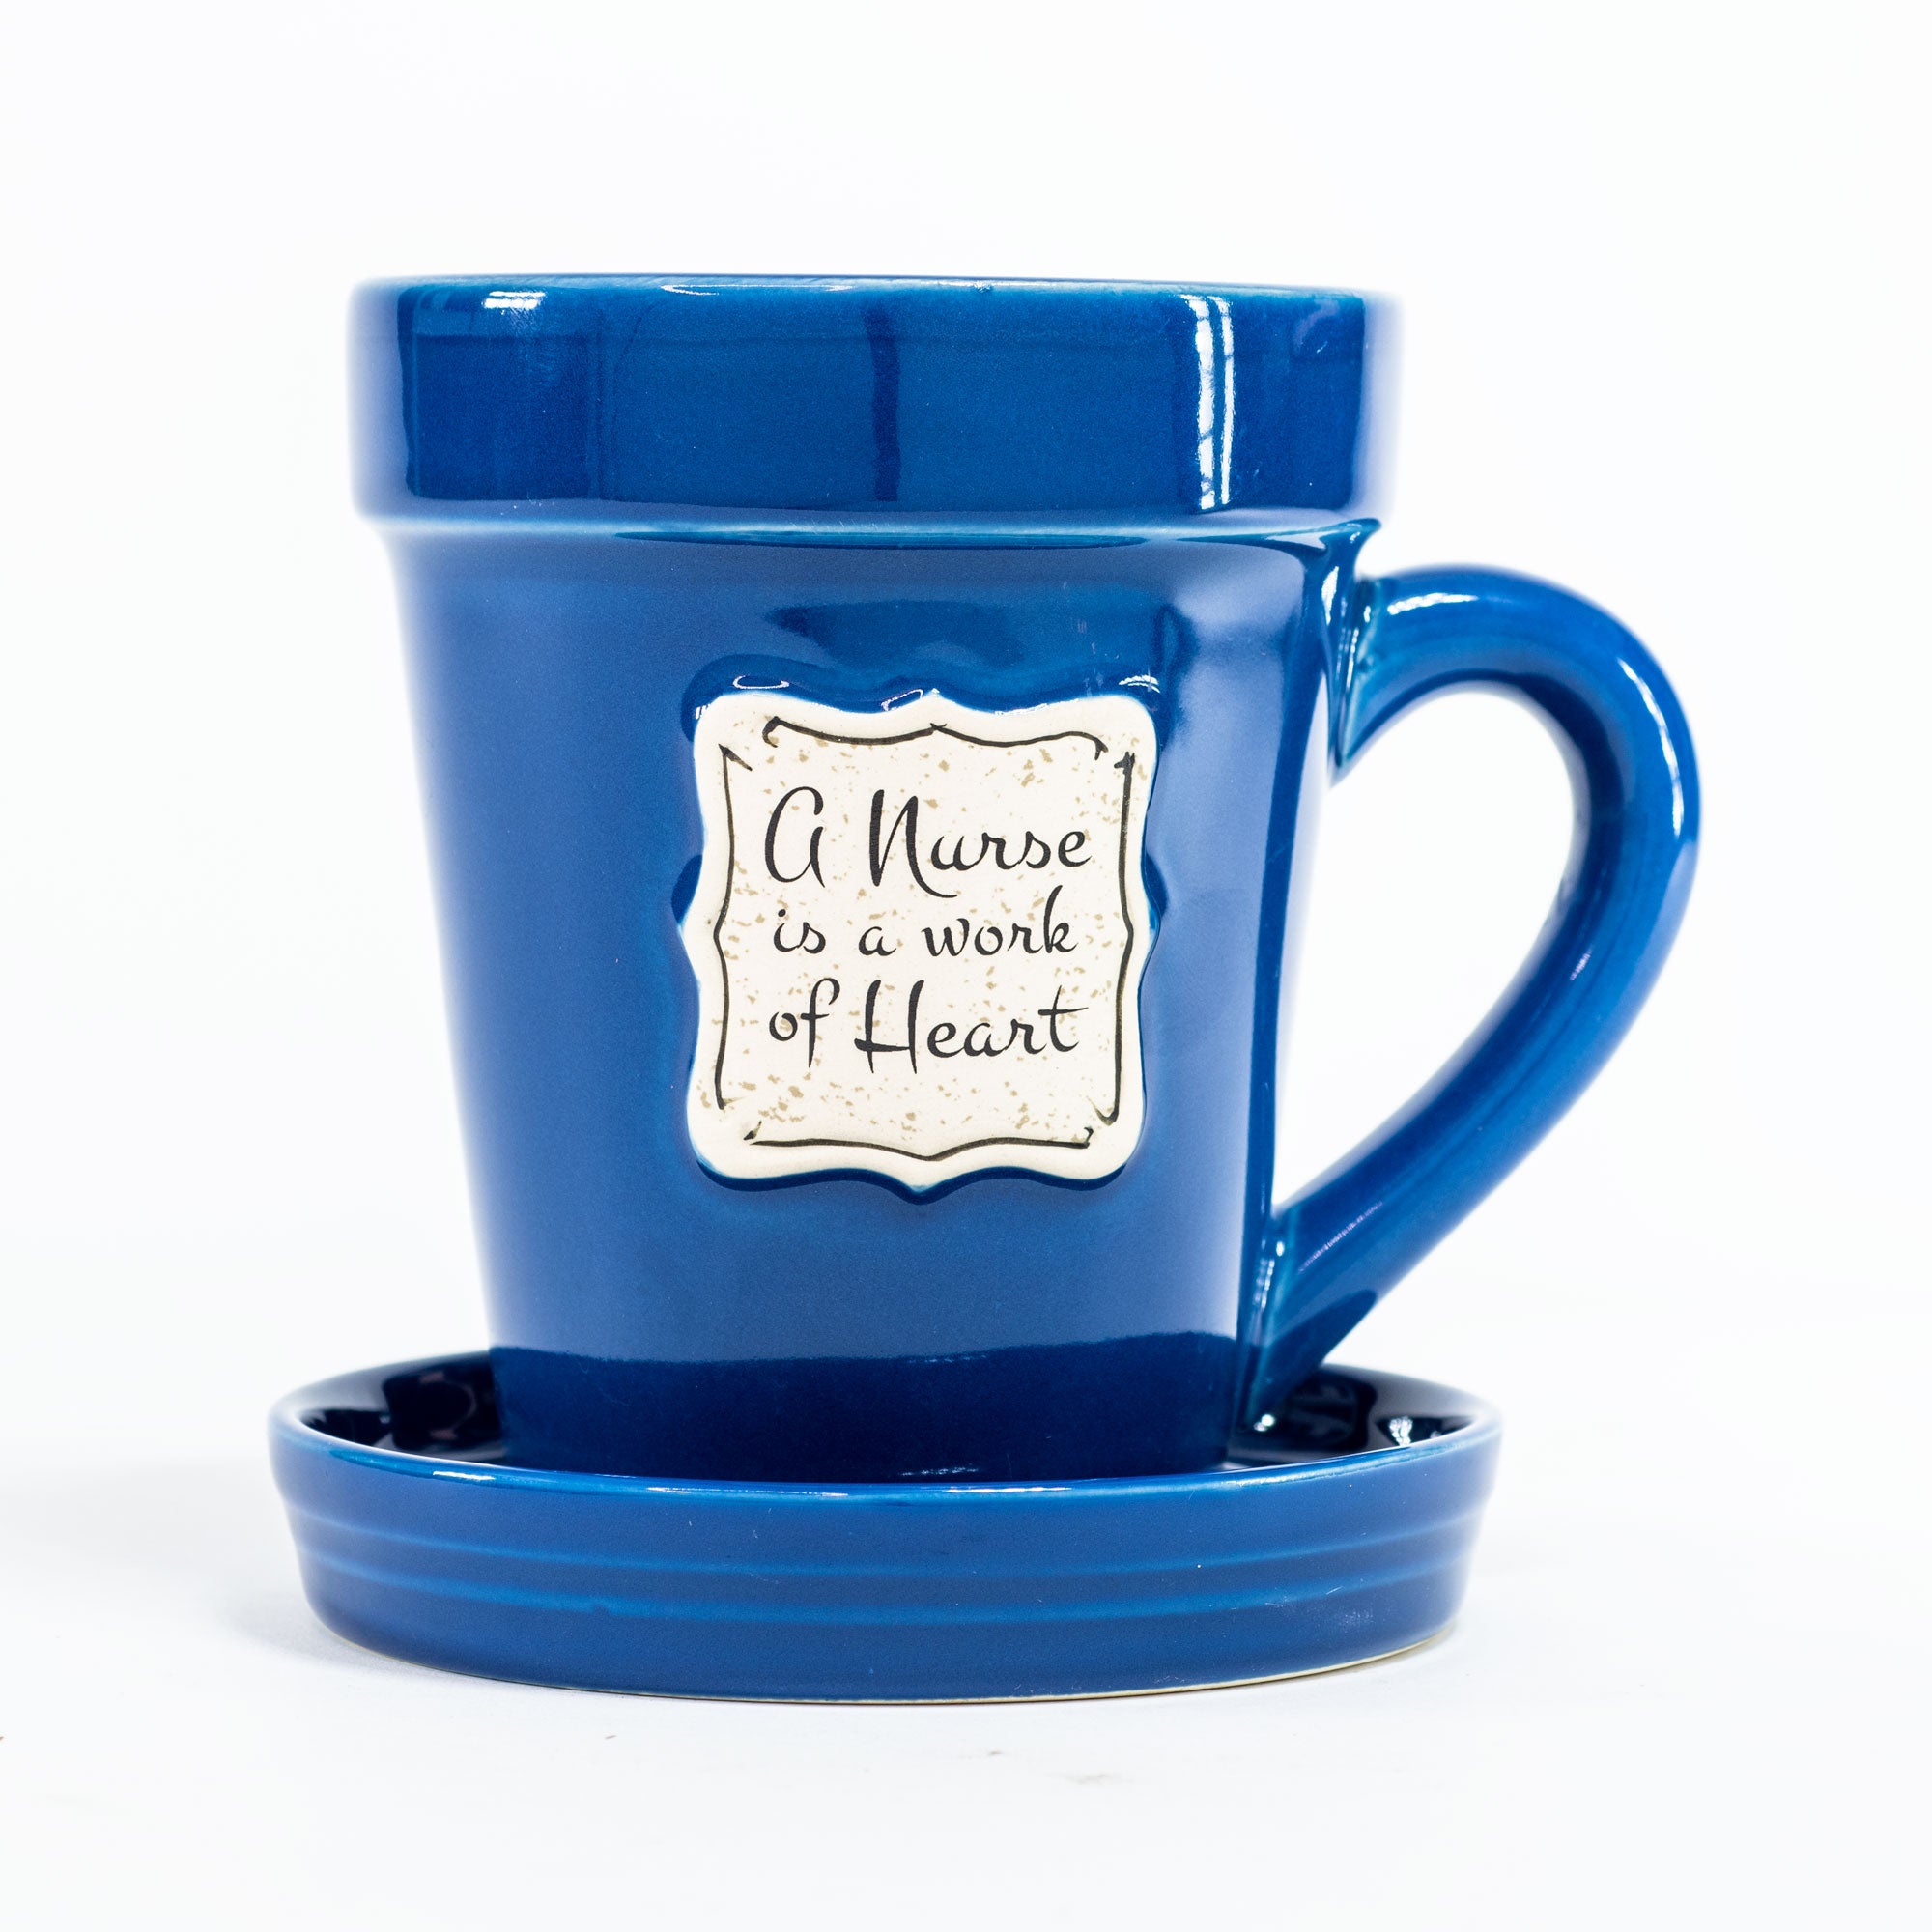 Flower Pot Mug: Med Blue - Nurse